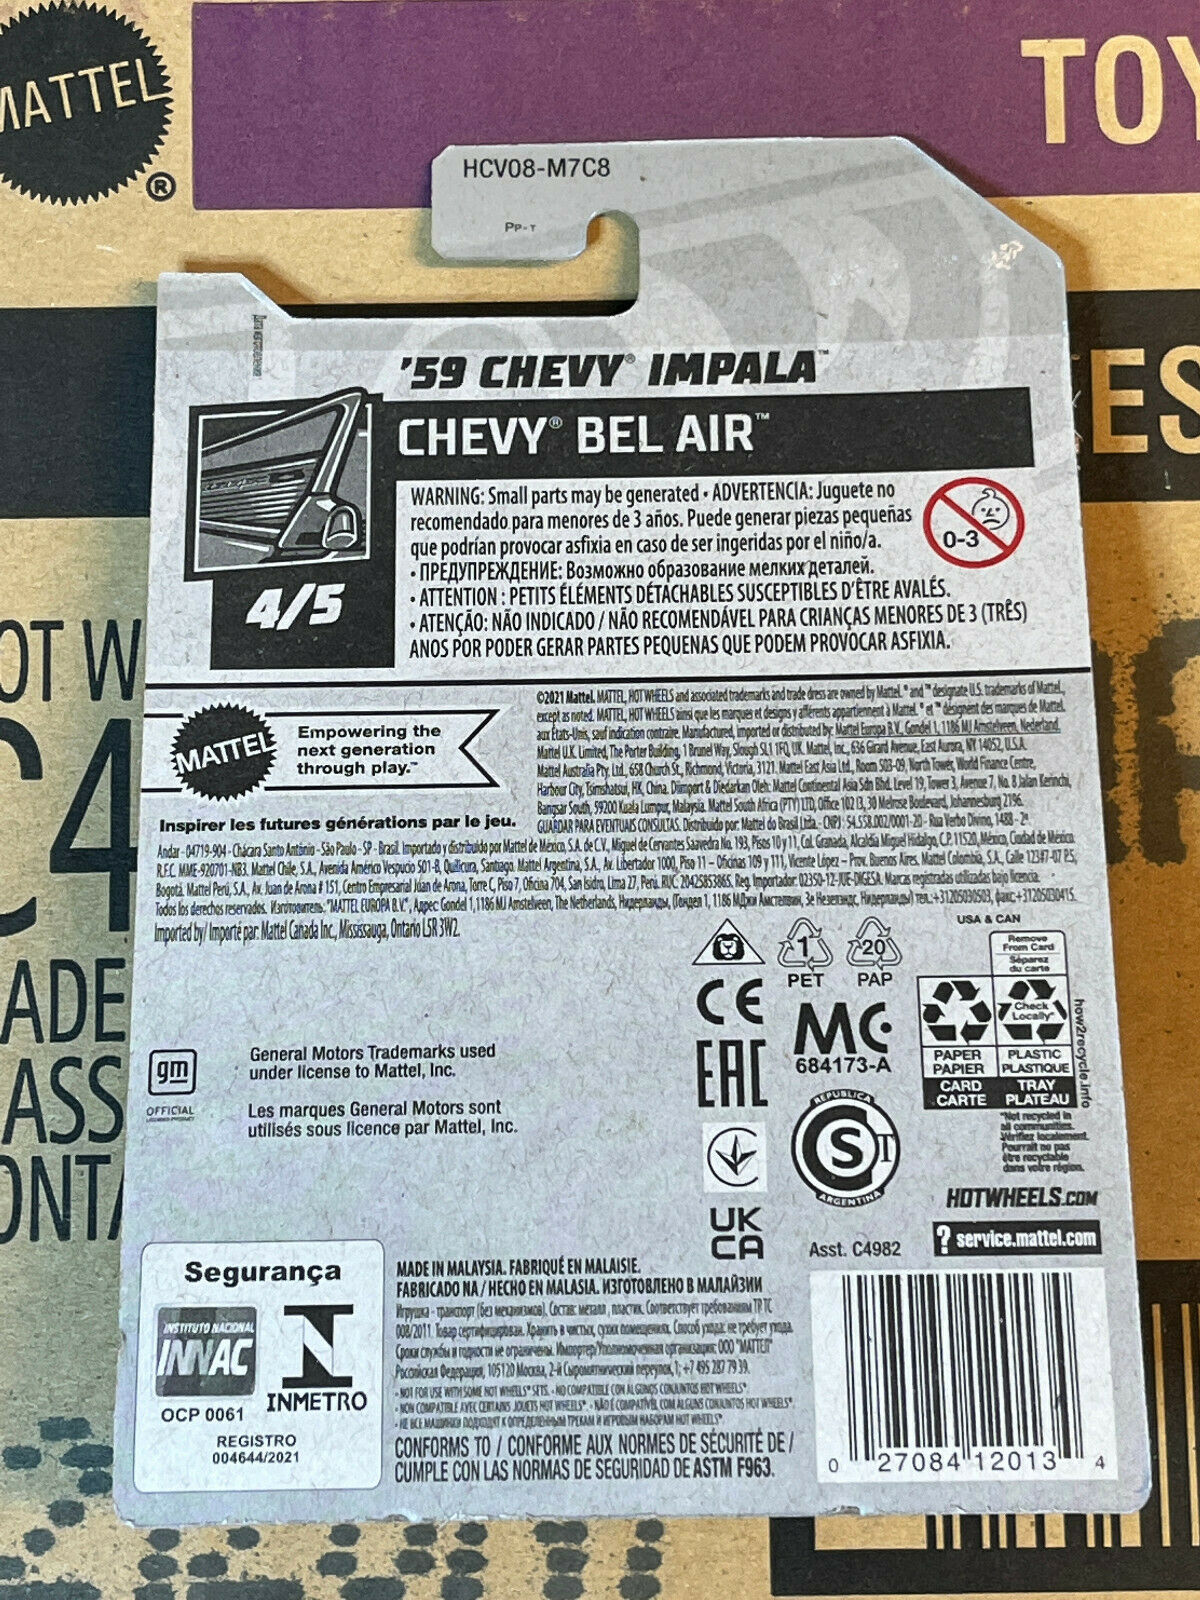 2022 Hot Wheels Chevy Bel Air #4/5 '59 Chevy Impala #70/250 NIP